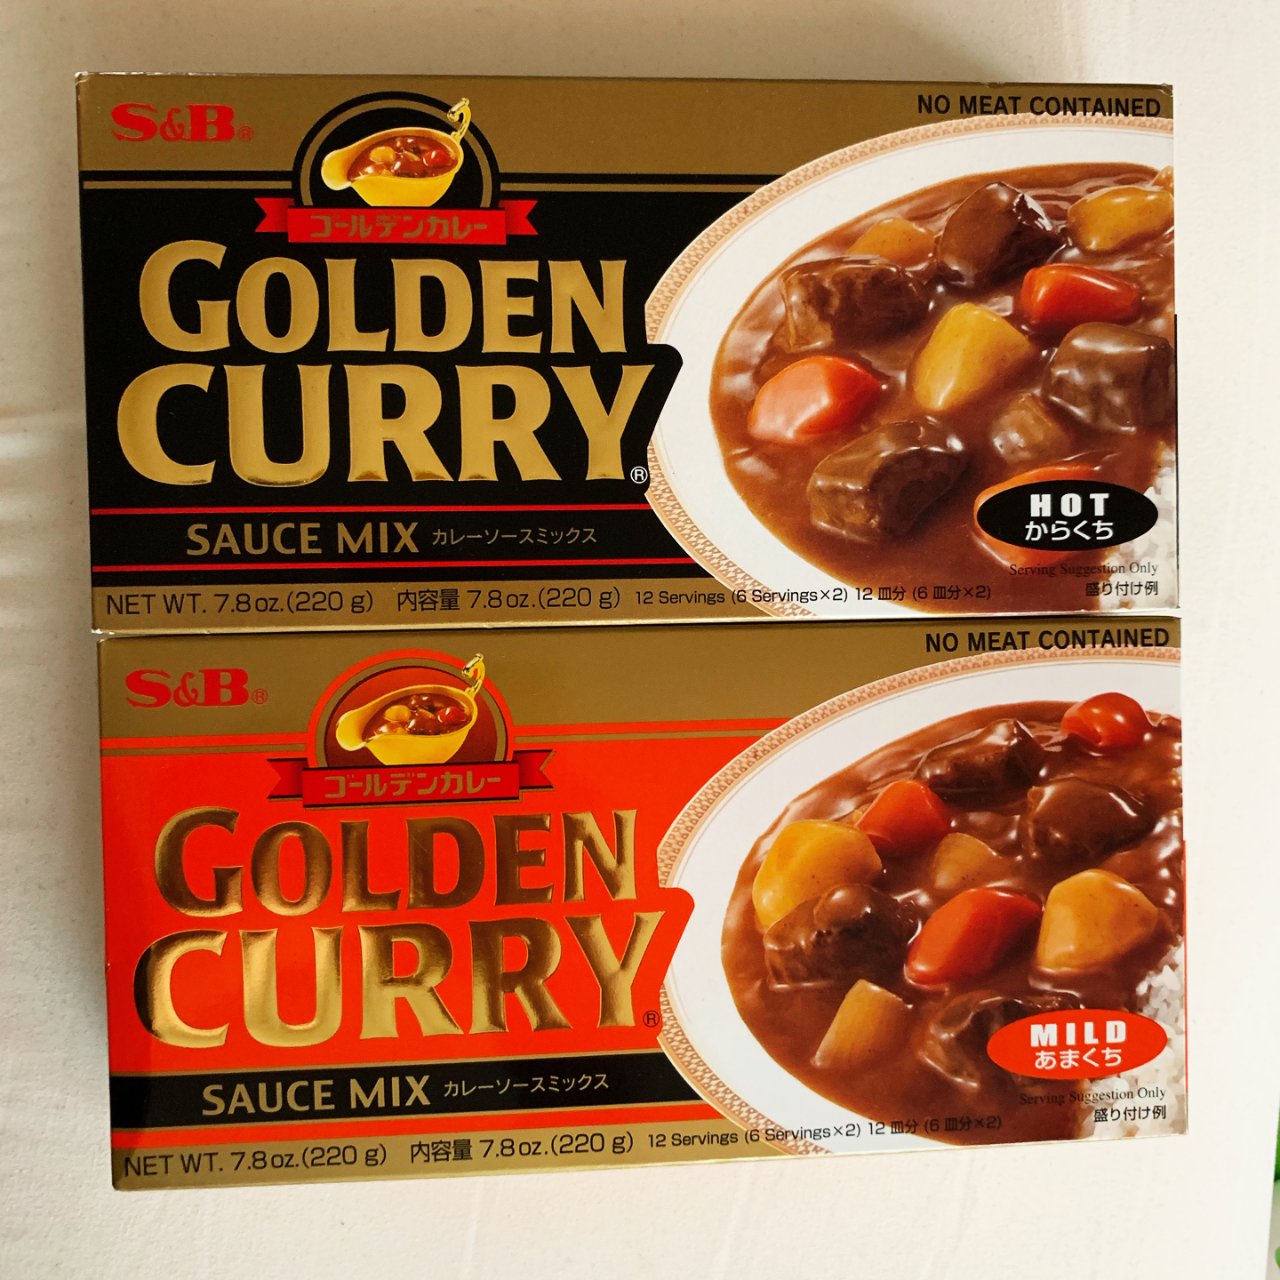 S&B,golden curry